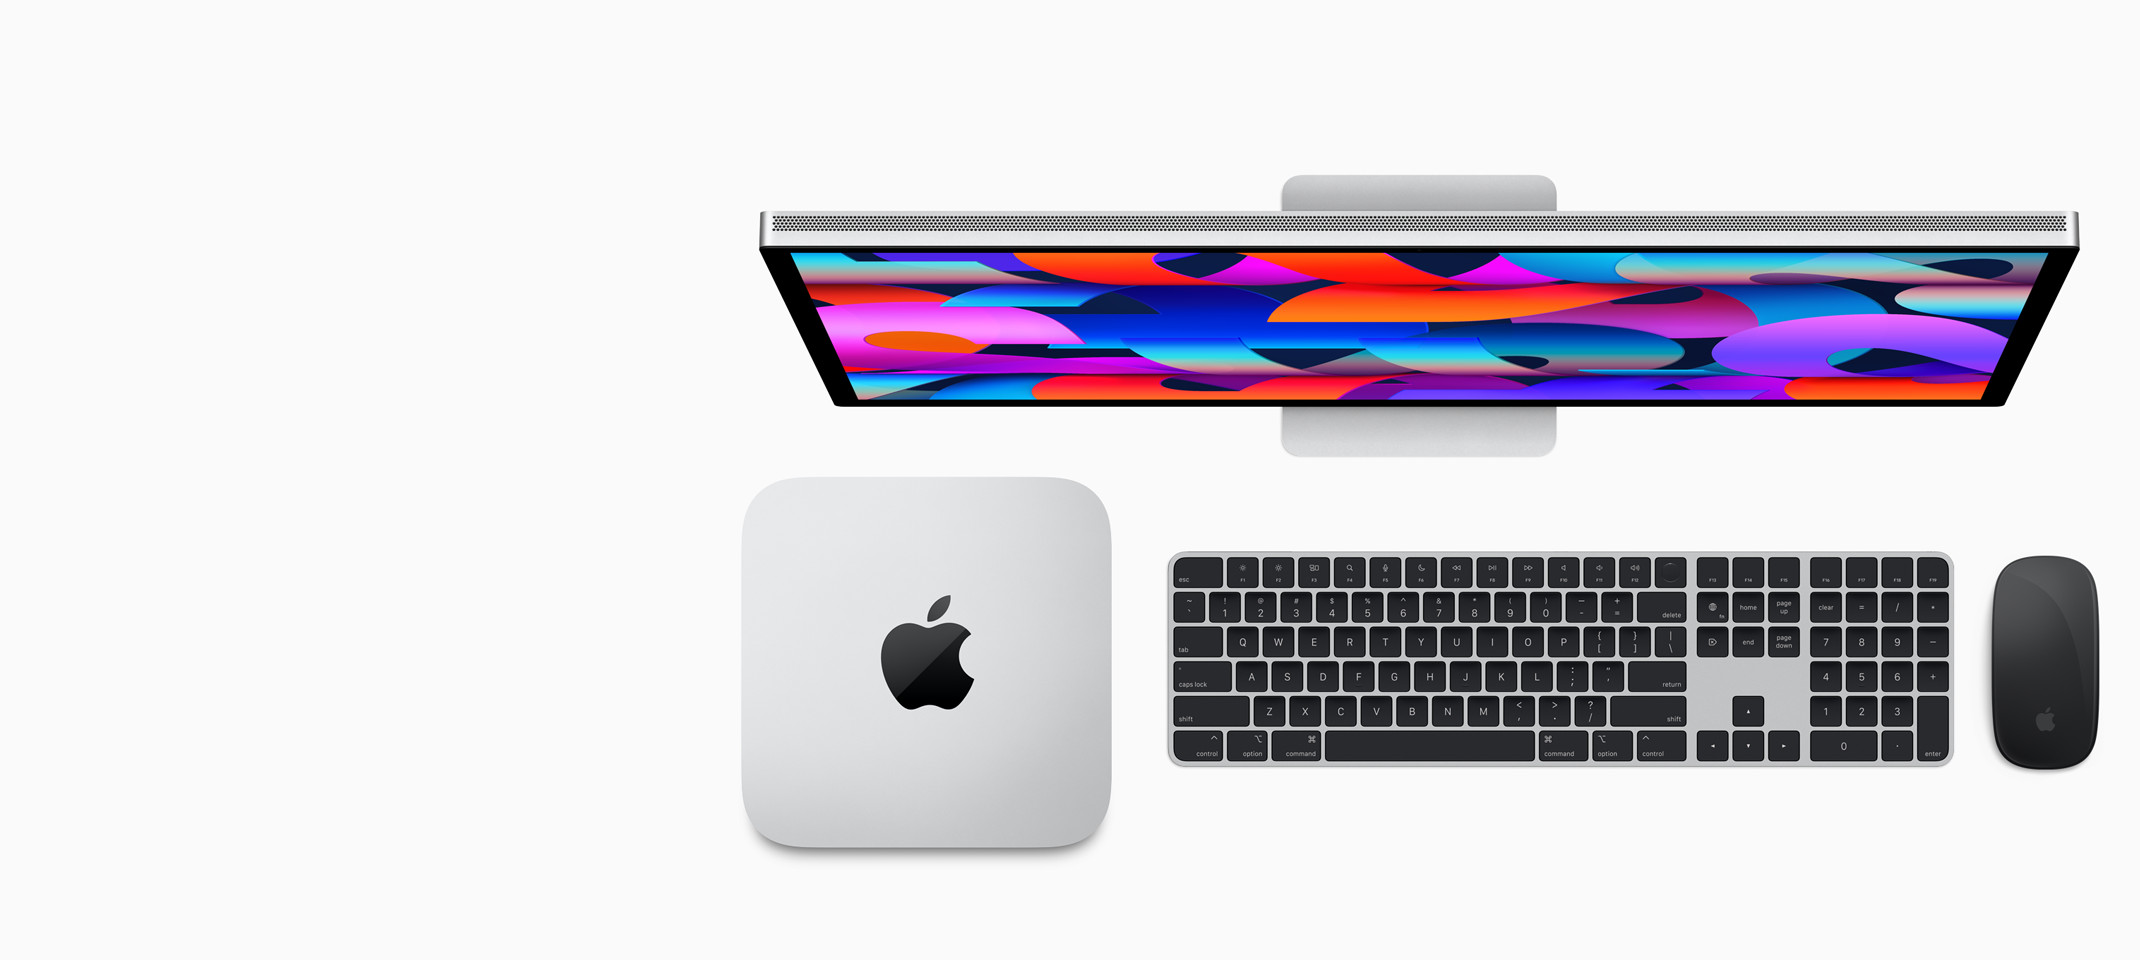 Studio Display, Mac Studio, Magic Keyboard com Touch ID e teclado numérico e Magic Mouse.